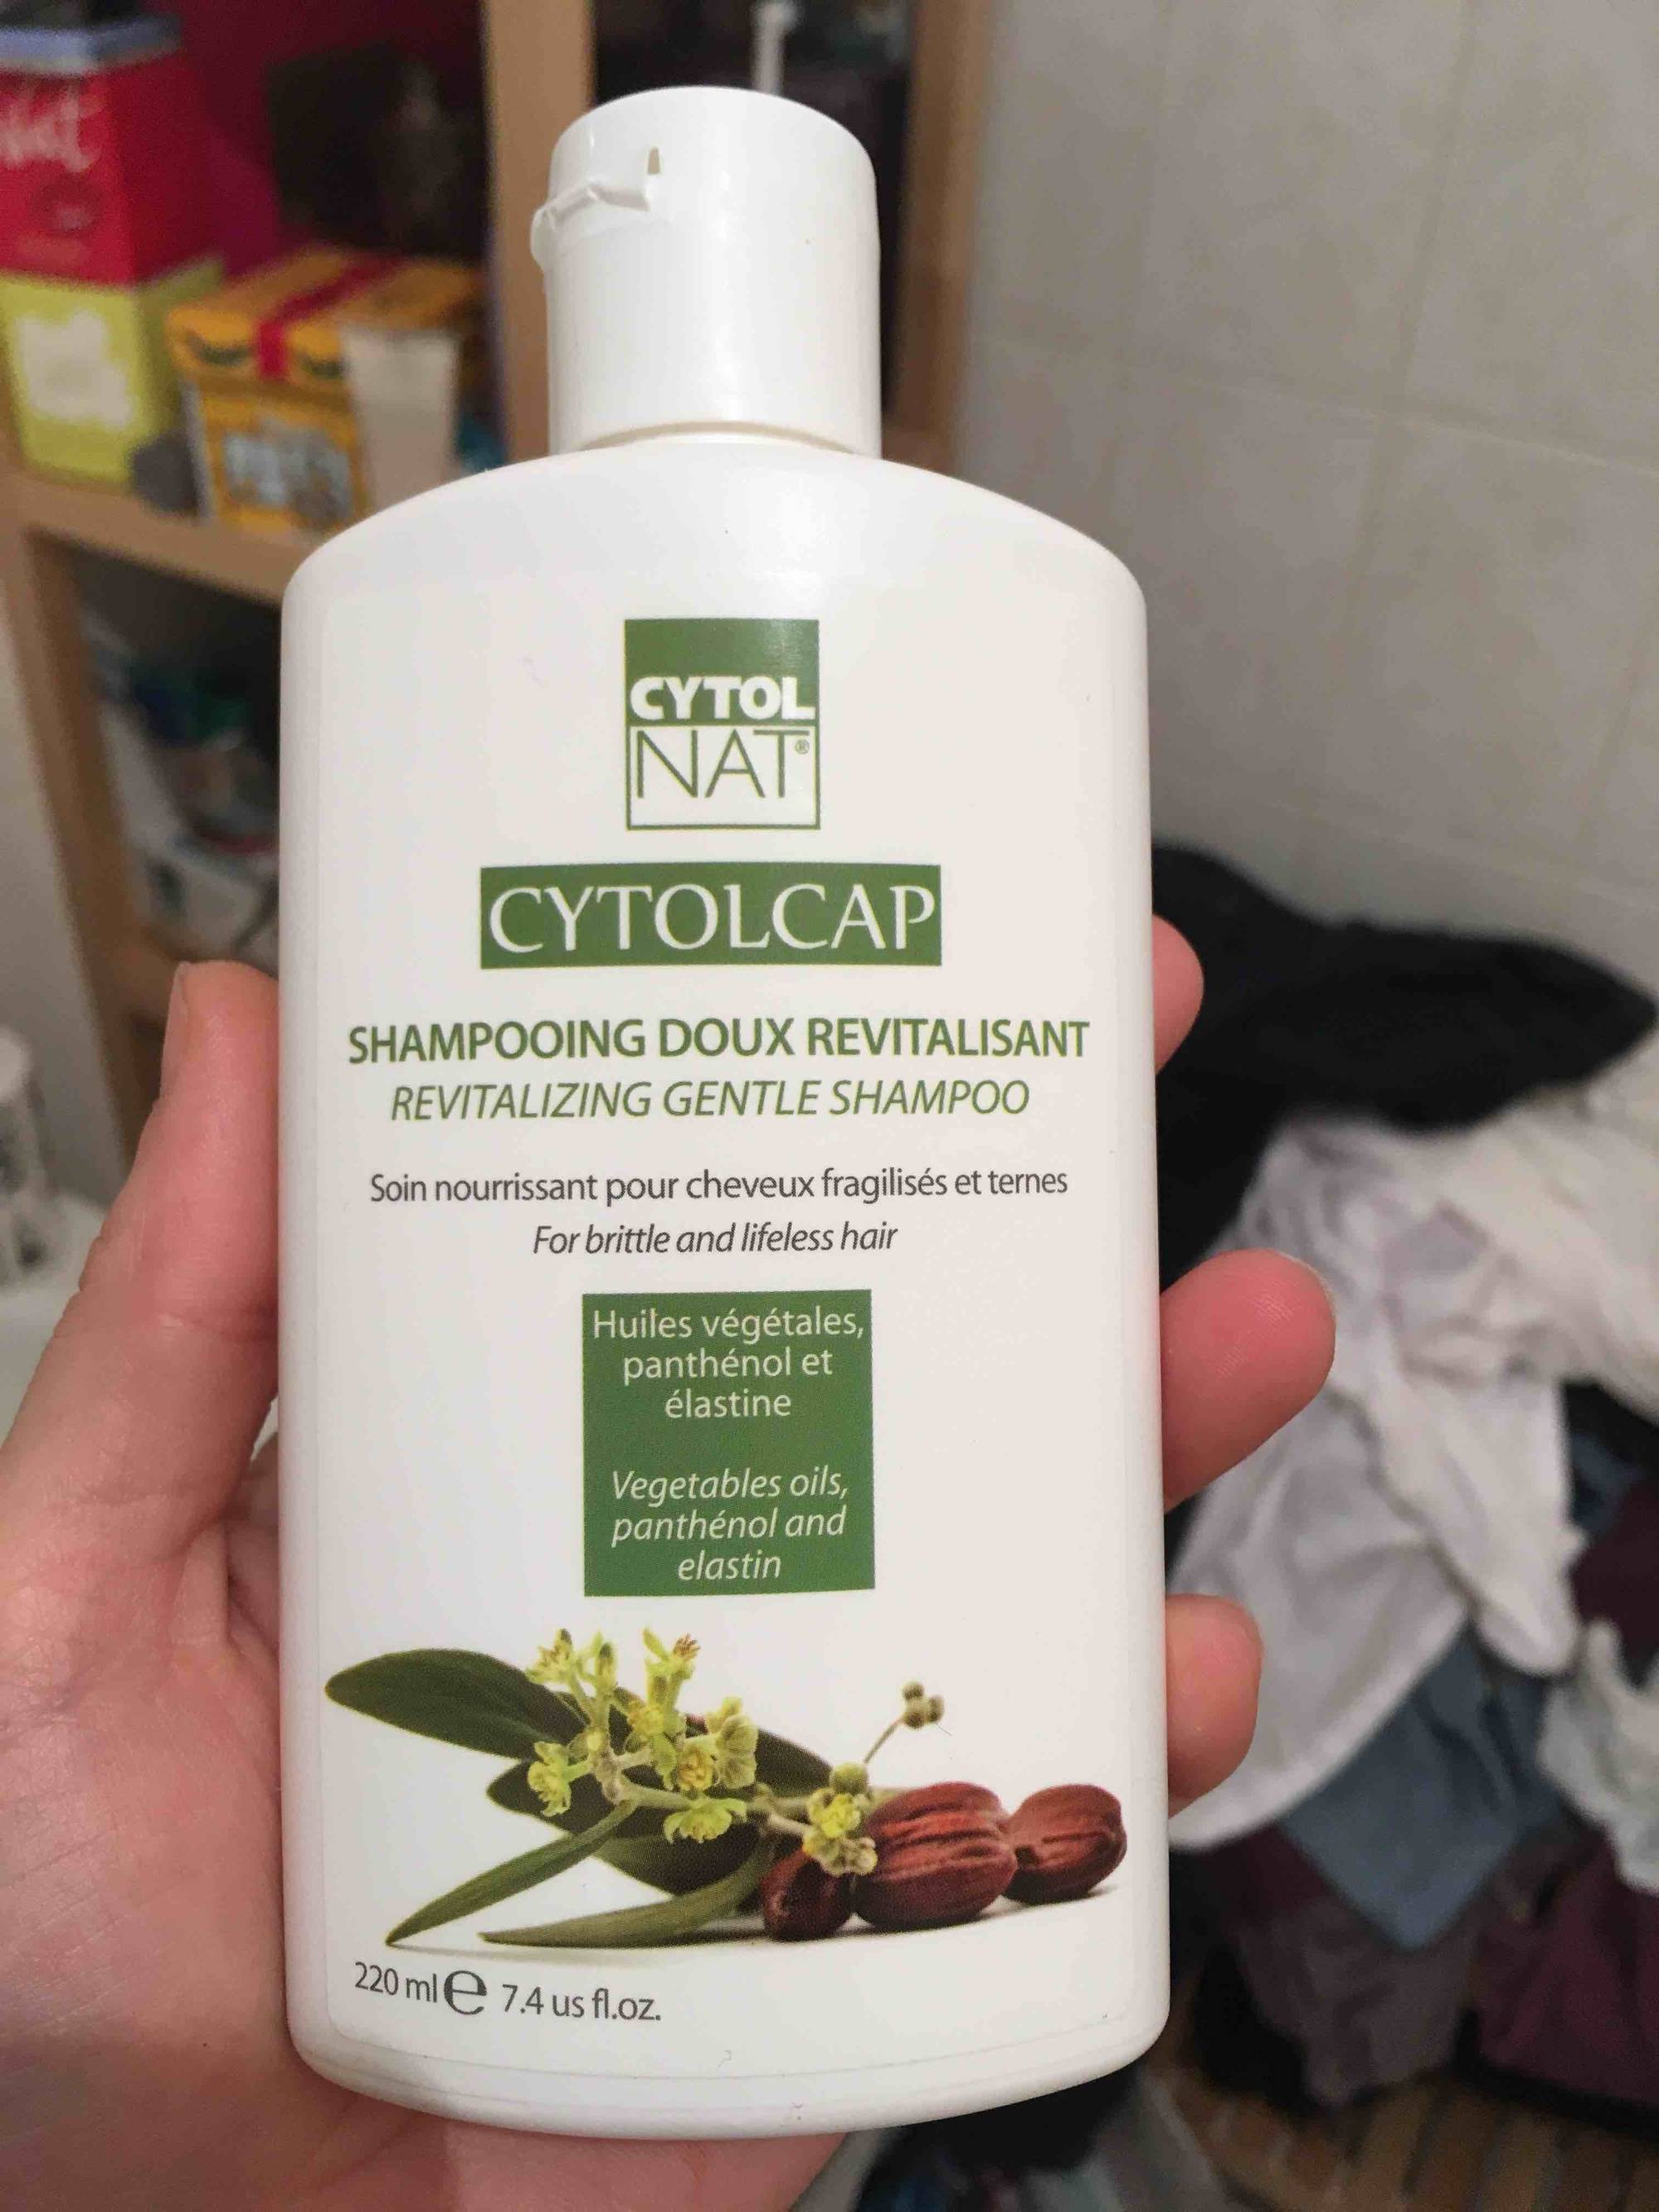 CYTOLNAT - Cytolcap - Shampooing doux revitalisant